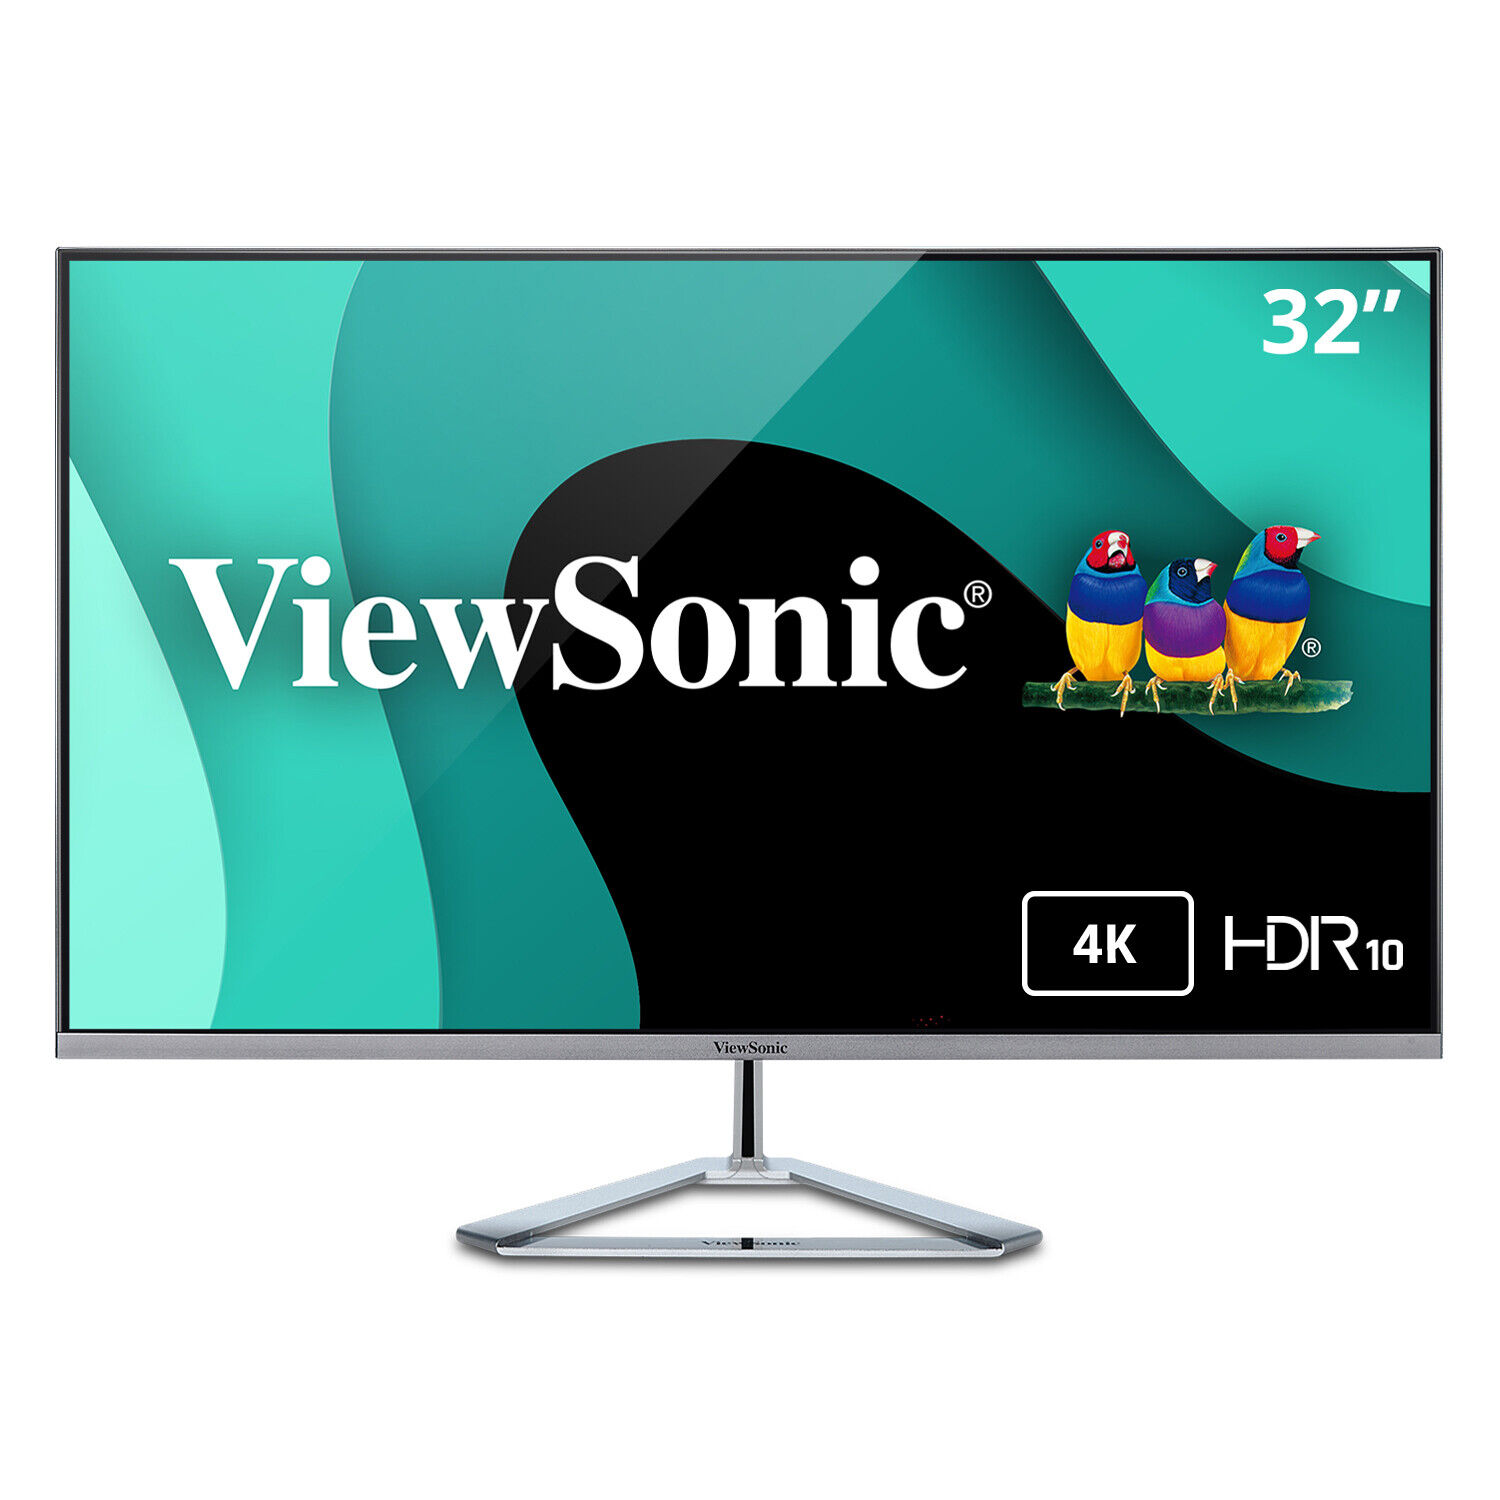 ViewSonic 4K UHD MonitorVX3276-4K-mhd 32